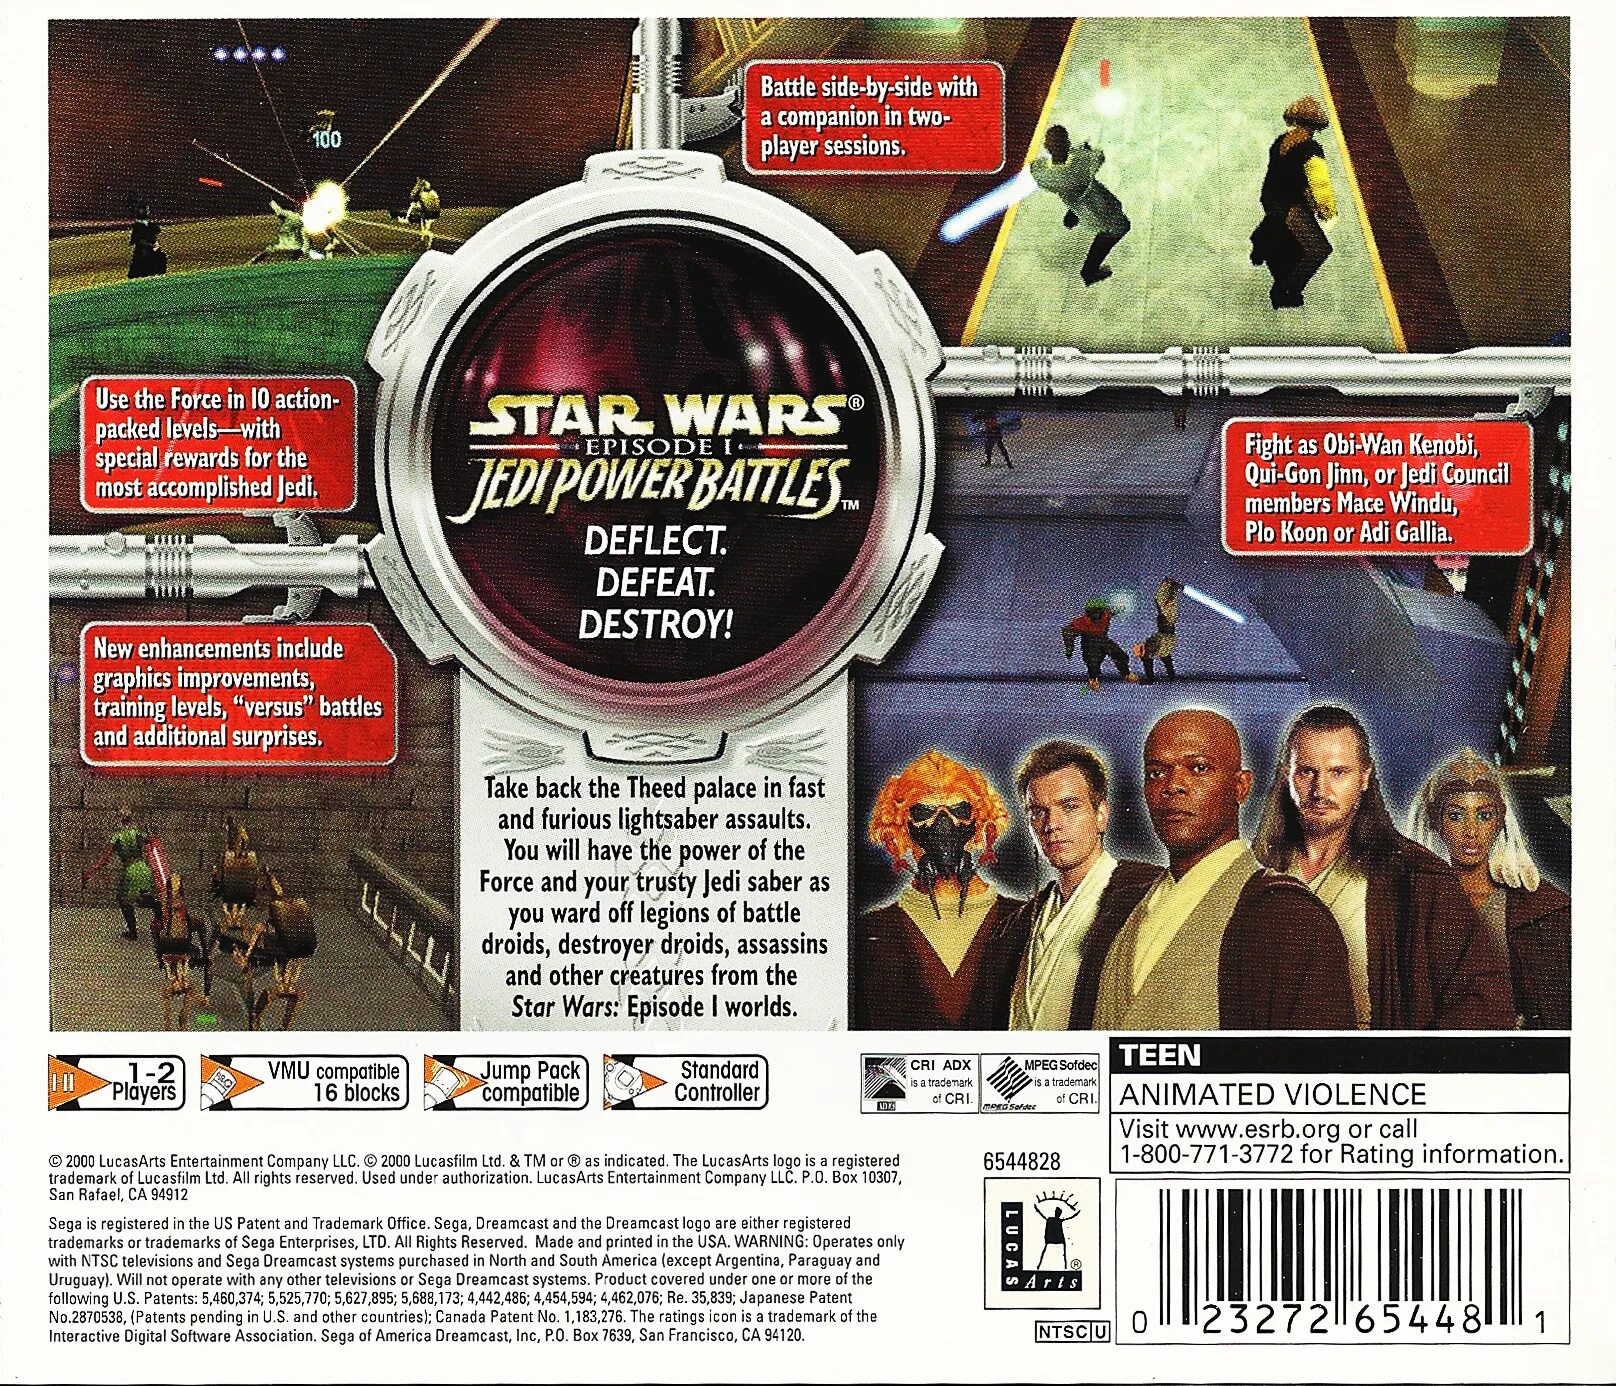 Star Wars Episode i Jedi Power Battles. Star Wars Episode 1 Jedi Power Battles. Star Wars - Episode i - Jedi Power Battle ps1 обложка. Sega Dreamcast Star Wars Episode 1.